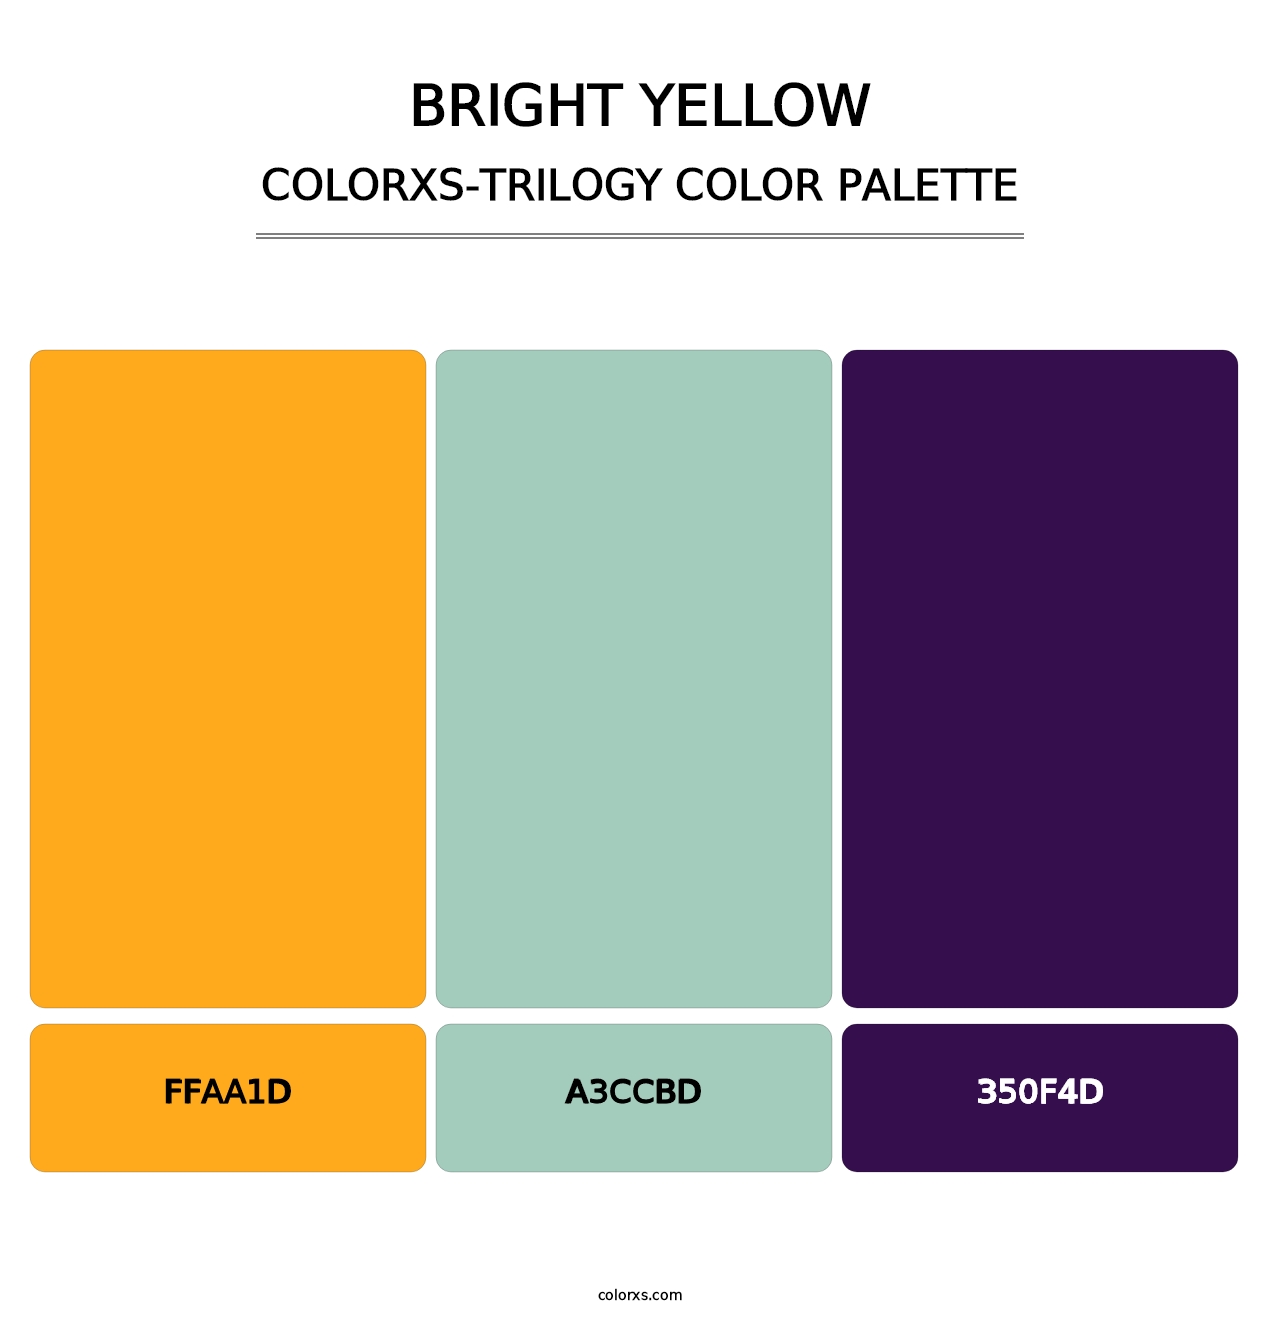 Bright Yellow - Colorxs Trilogy Palette